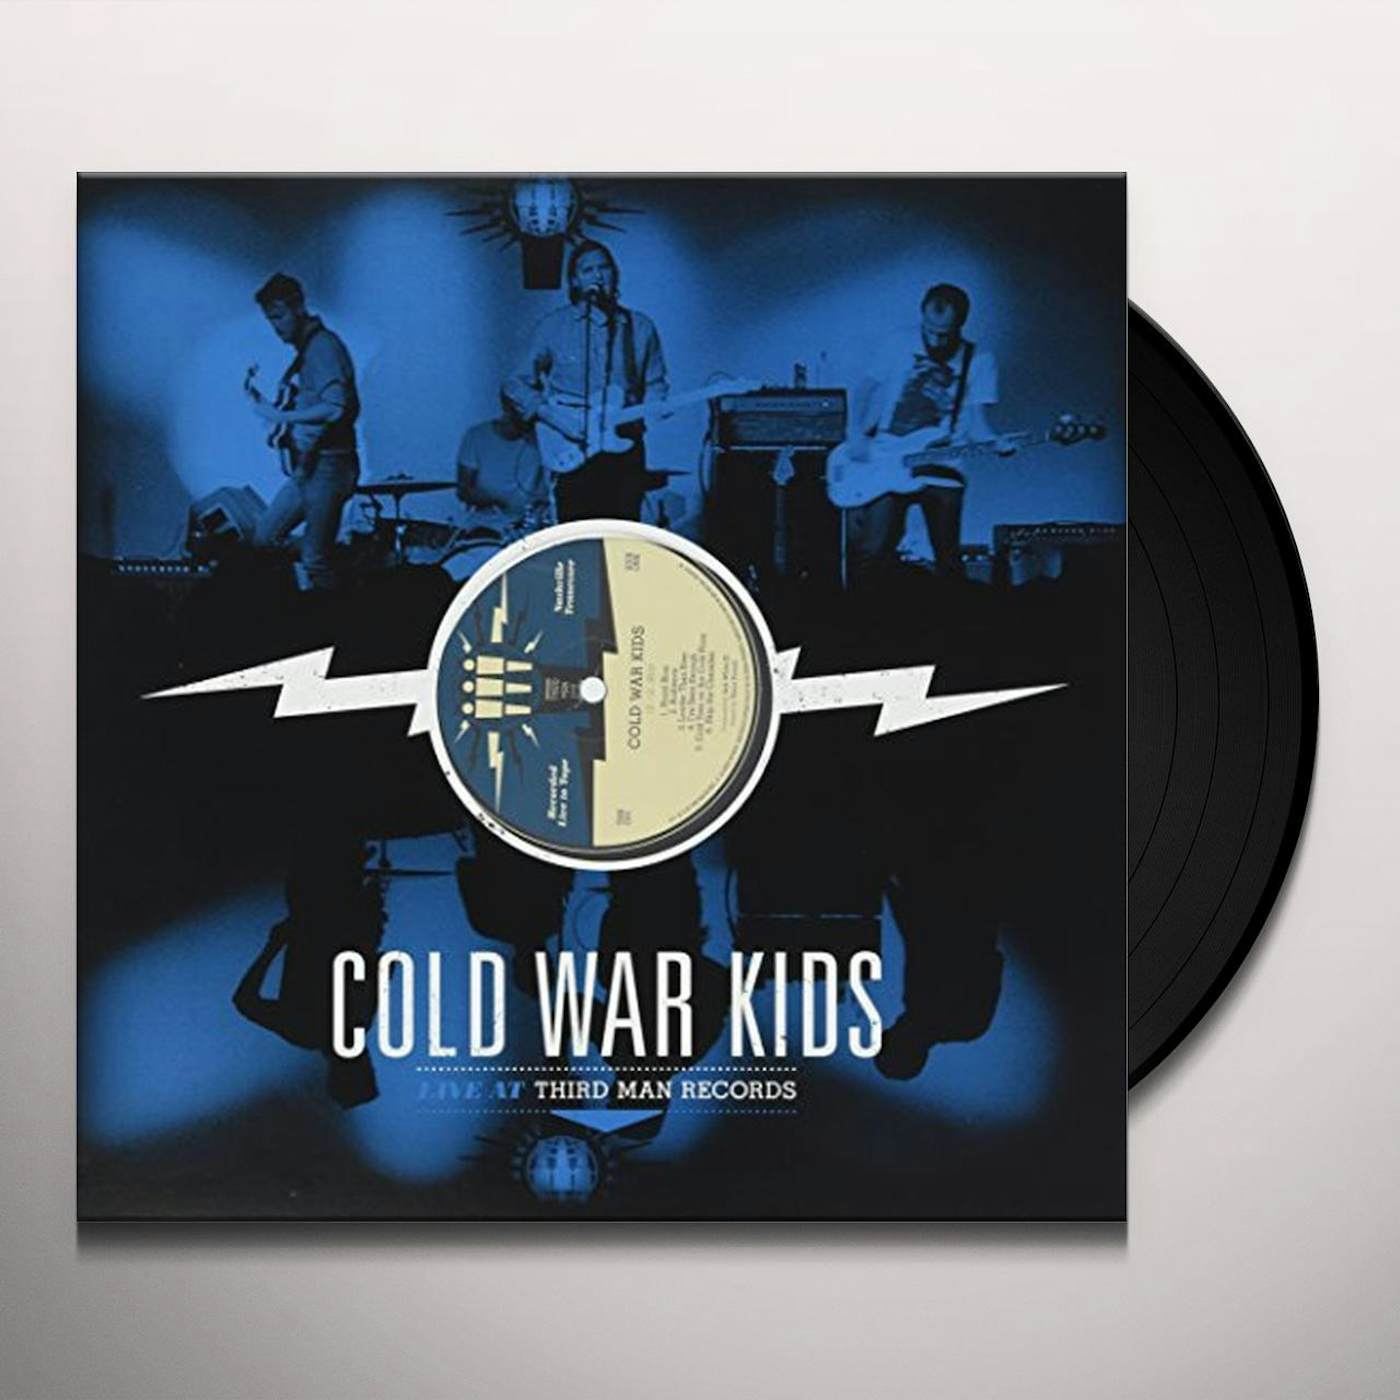 Cold War Kids LIVE AT THIRD MAN RECORDS Vinyl Record